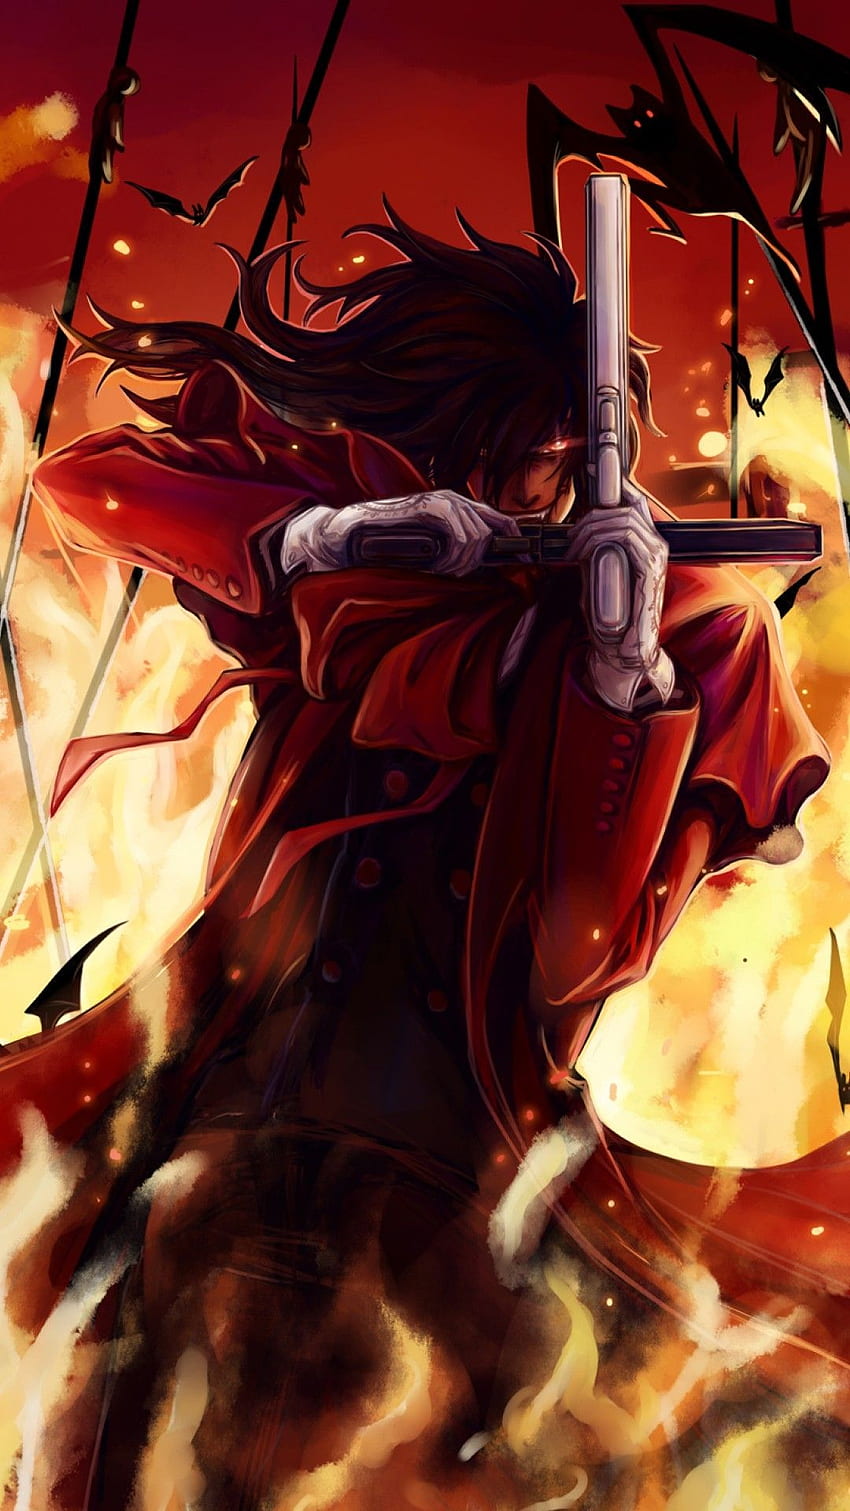 Wallpaper ID: 363436 / Anime Hellsing Phone Wallpaper, Alucard (Hellsing),  1080x2340 free download